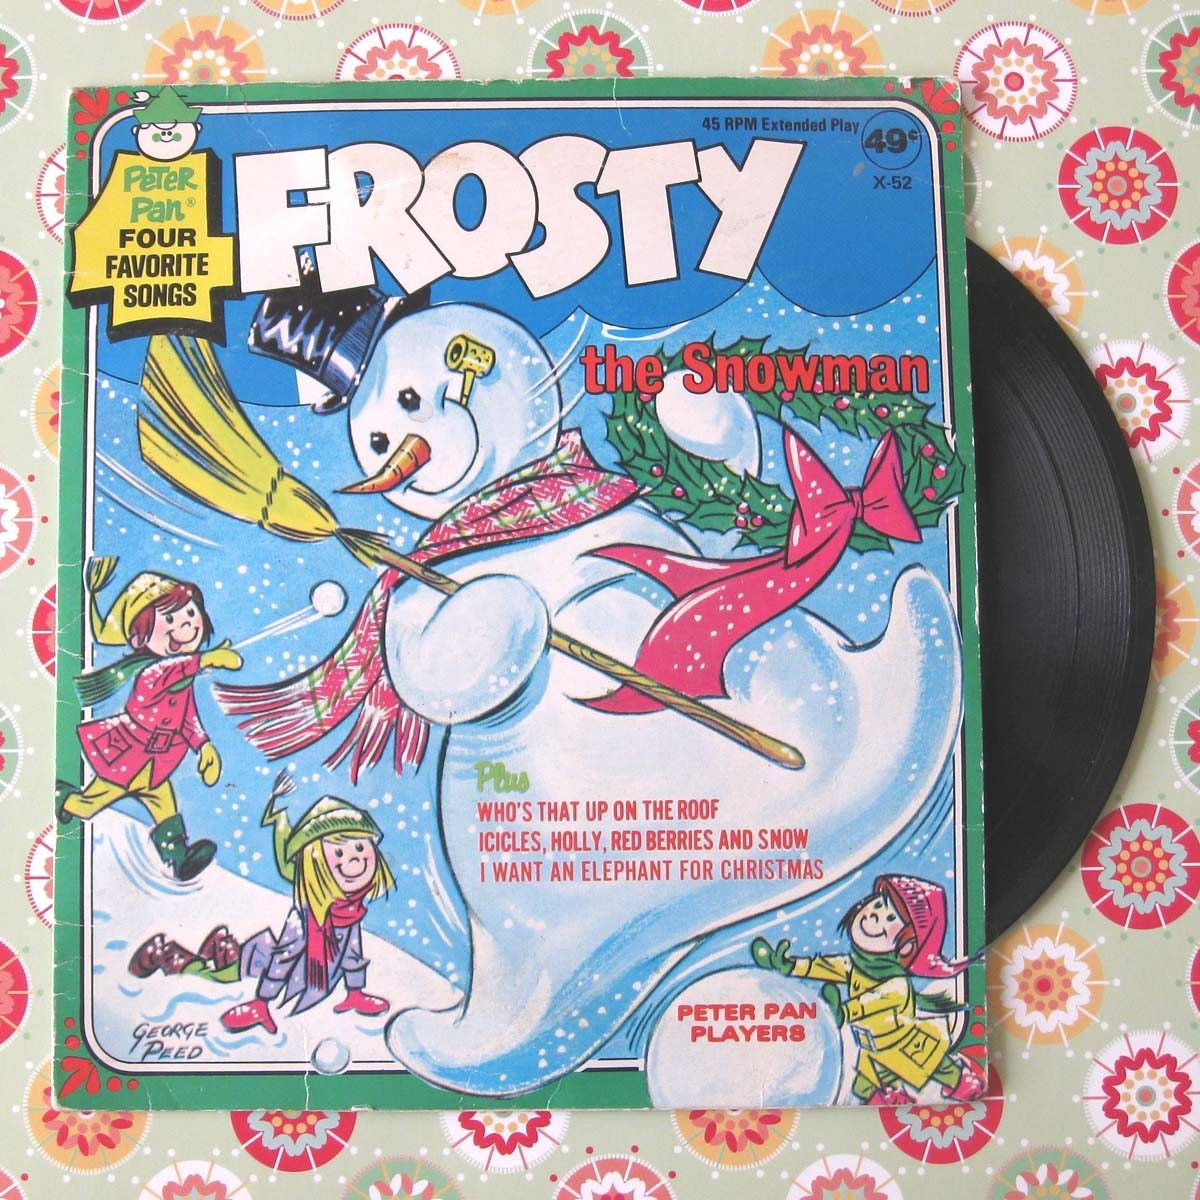 frosty 33 rpm